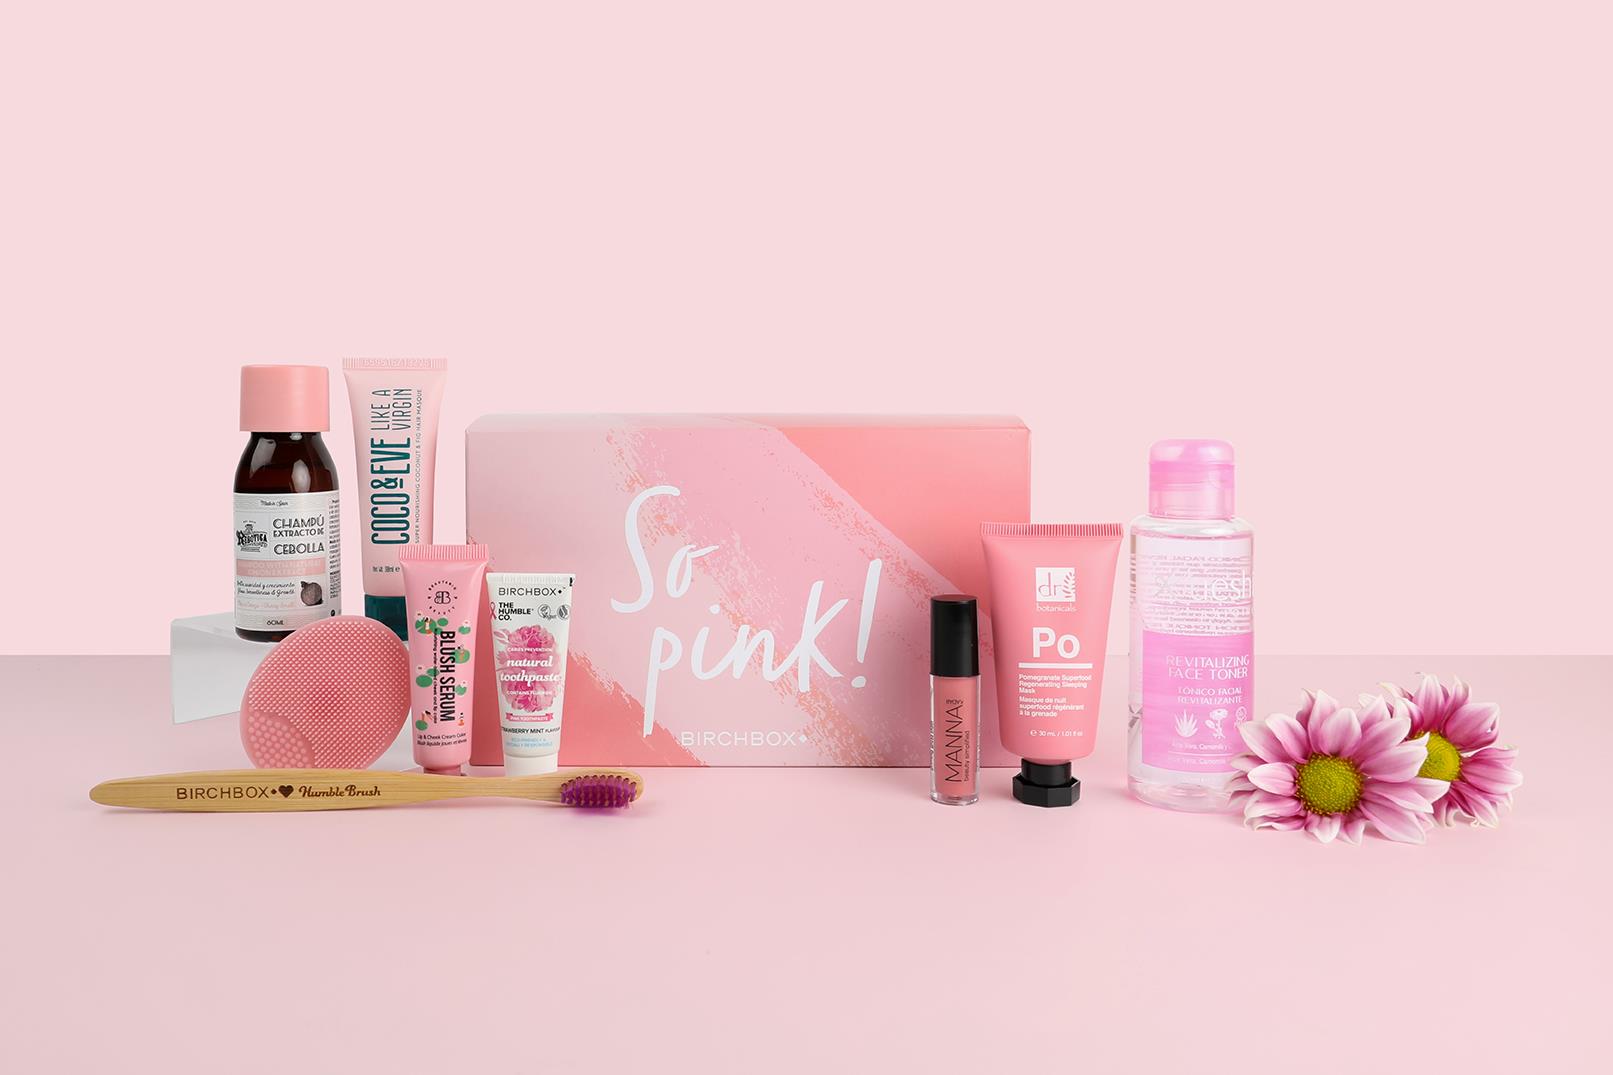 Birchbox en rosa - So Pink!